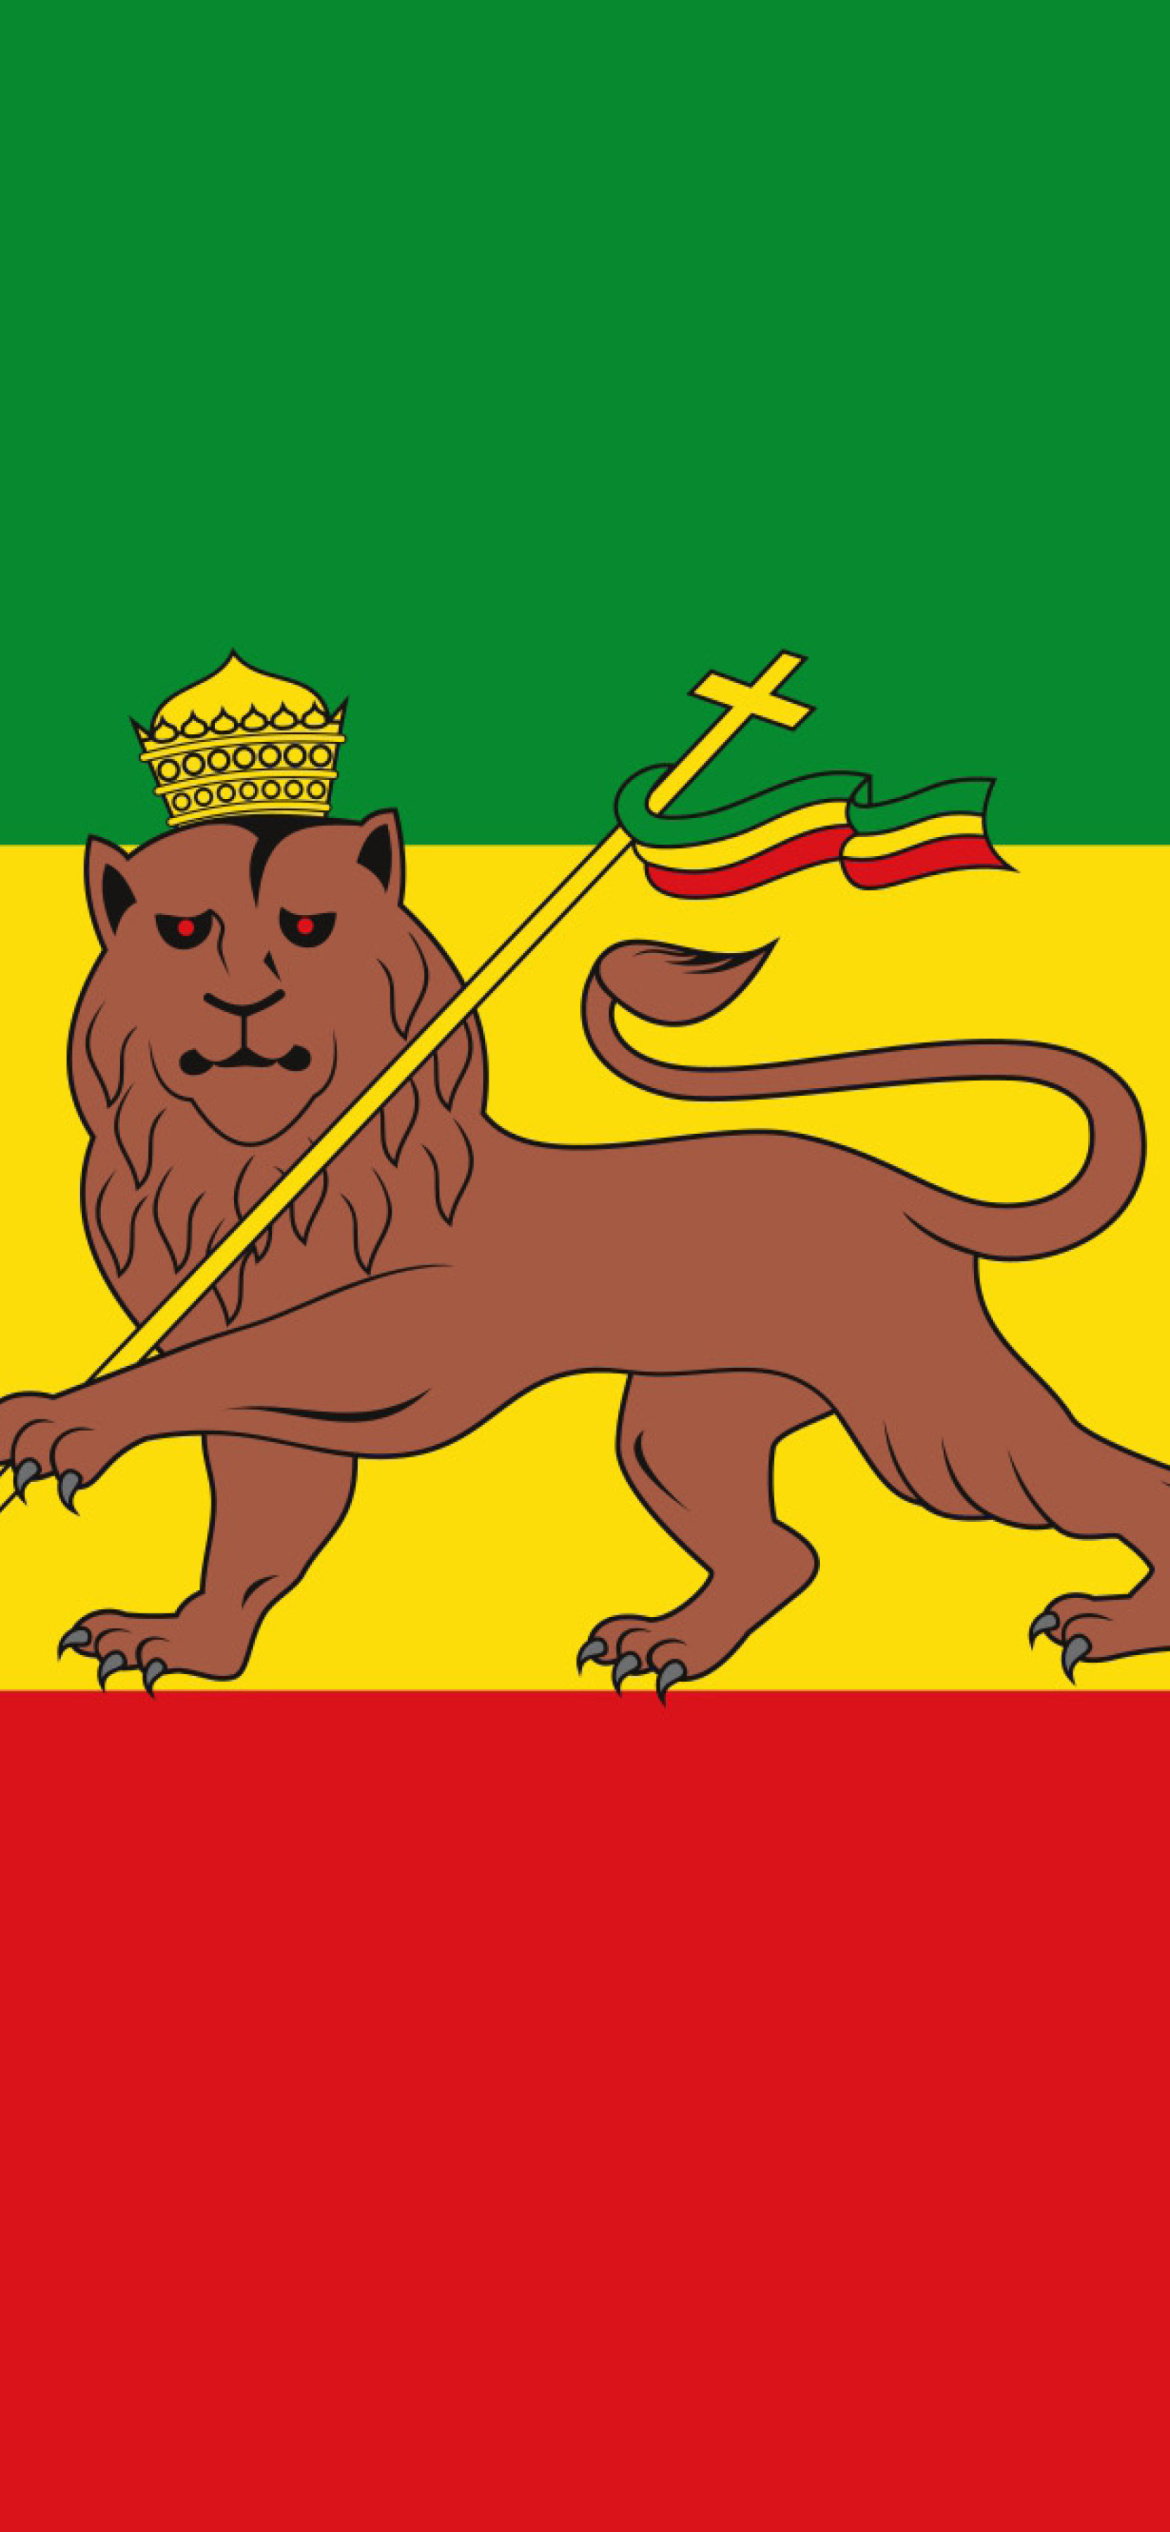 Flag of Ethiopia wallpaper 1170x2532